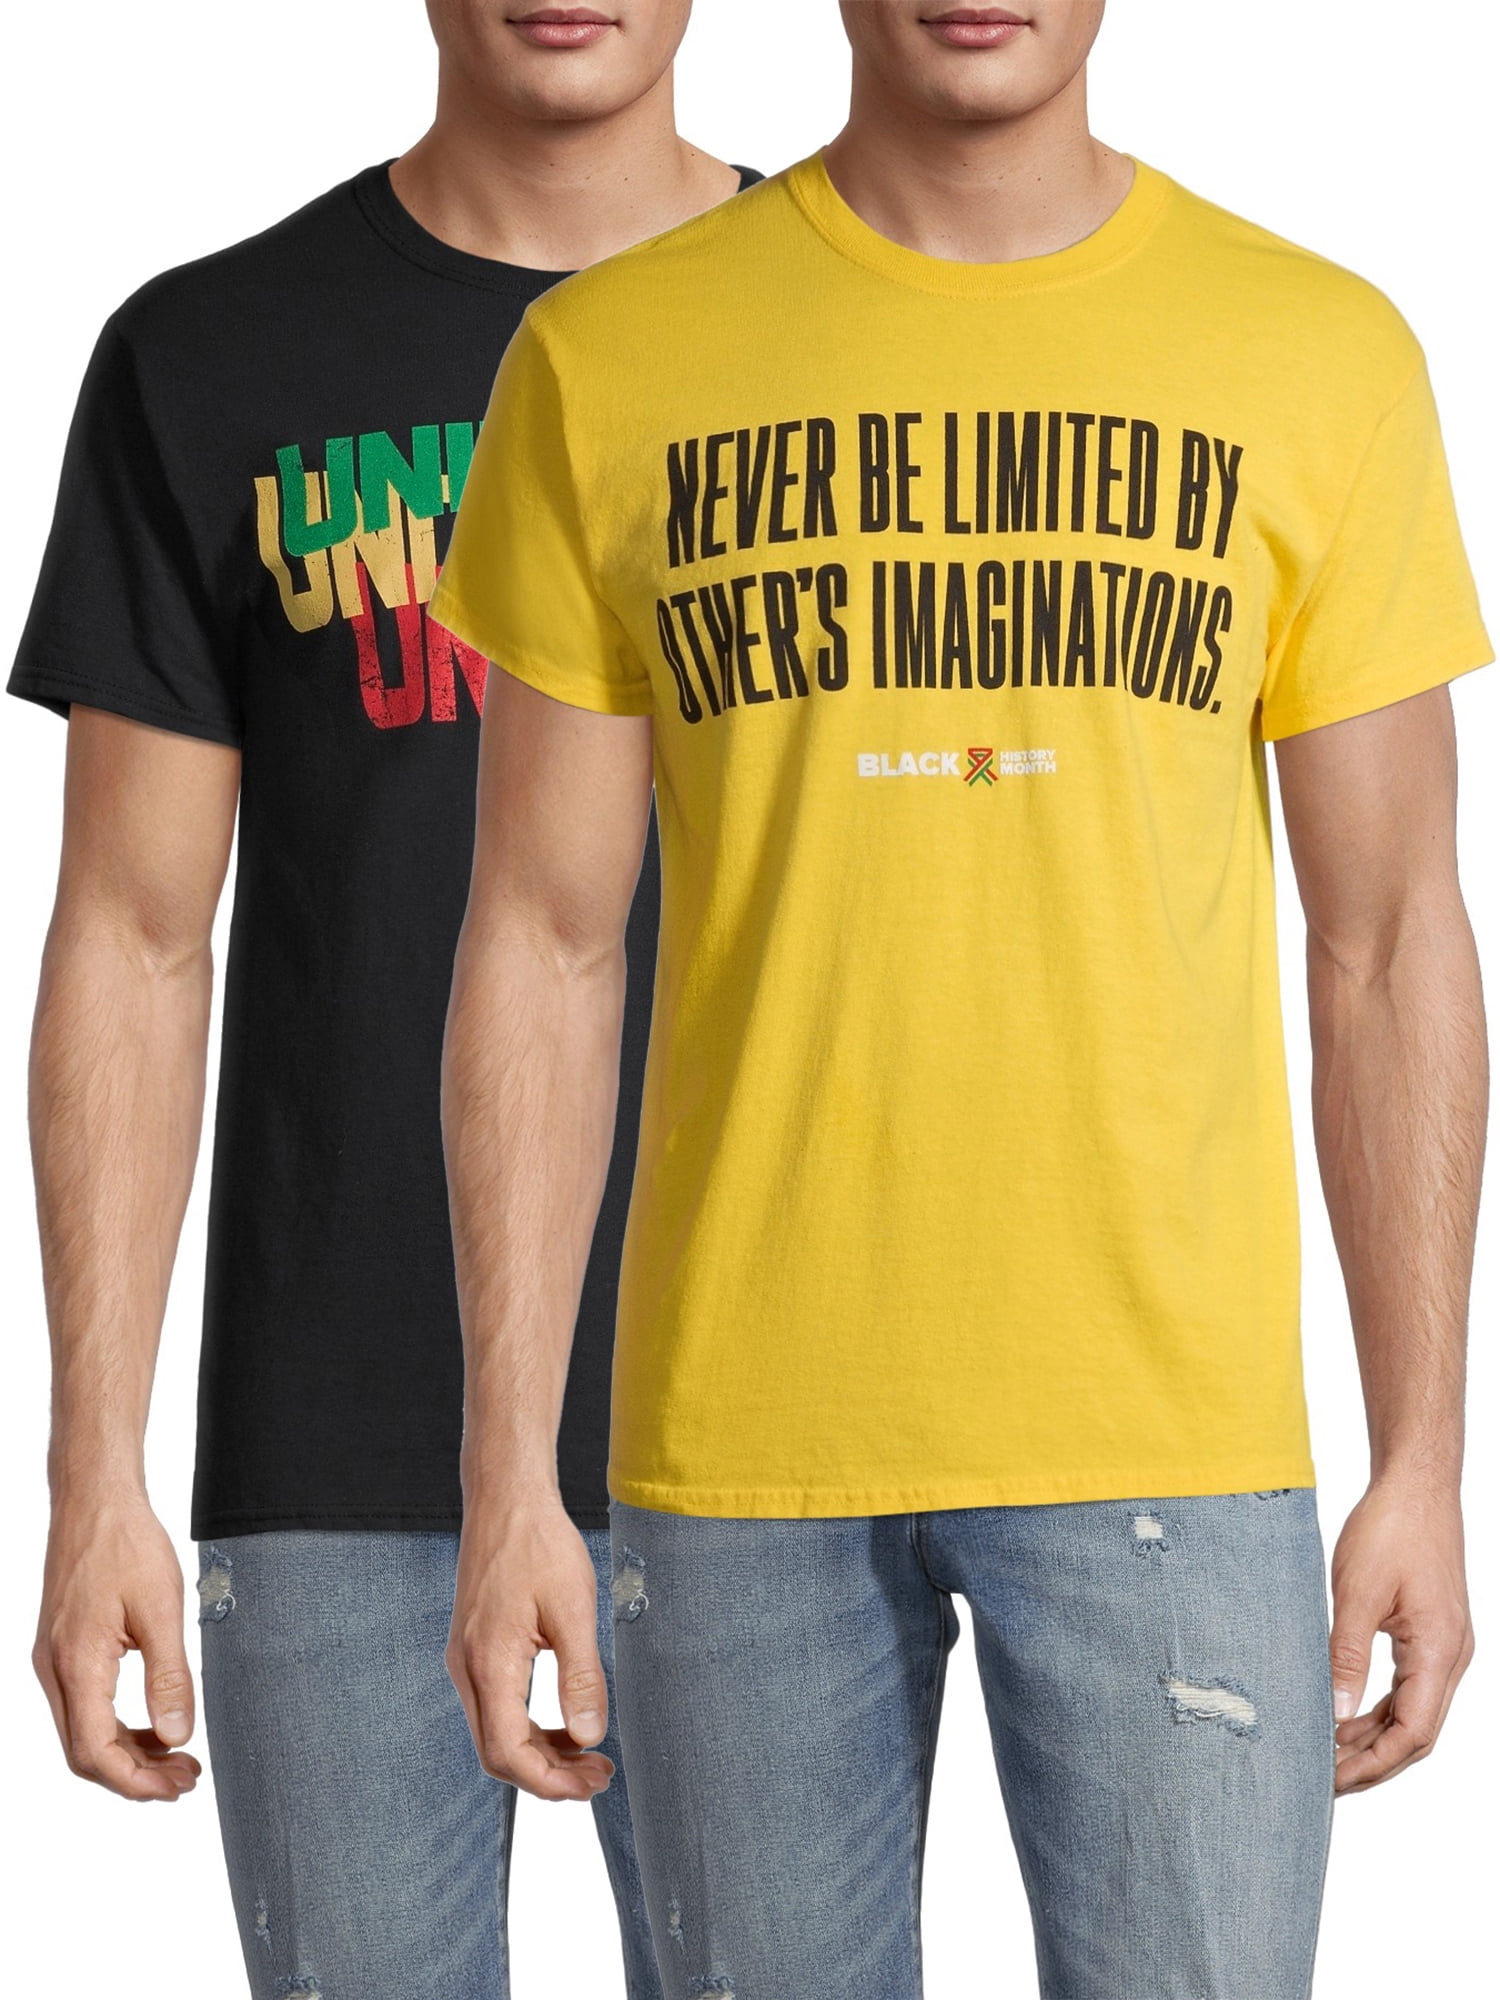 Dream Big Vintage T-Shirt Motivational Shirt Cool Tee Personalized Inspirational Shirt Comfy Tee Plus Size Shirts